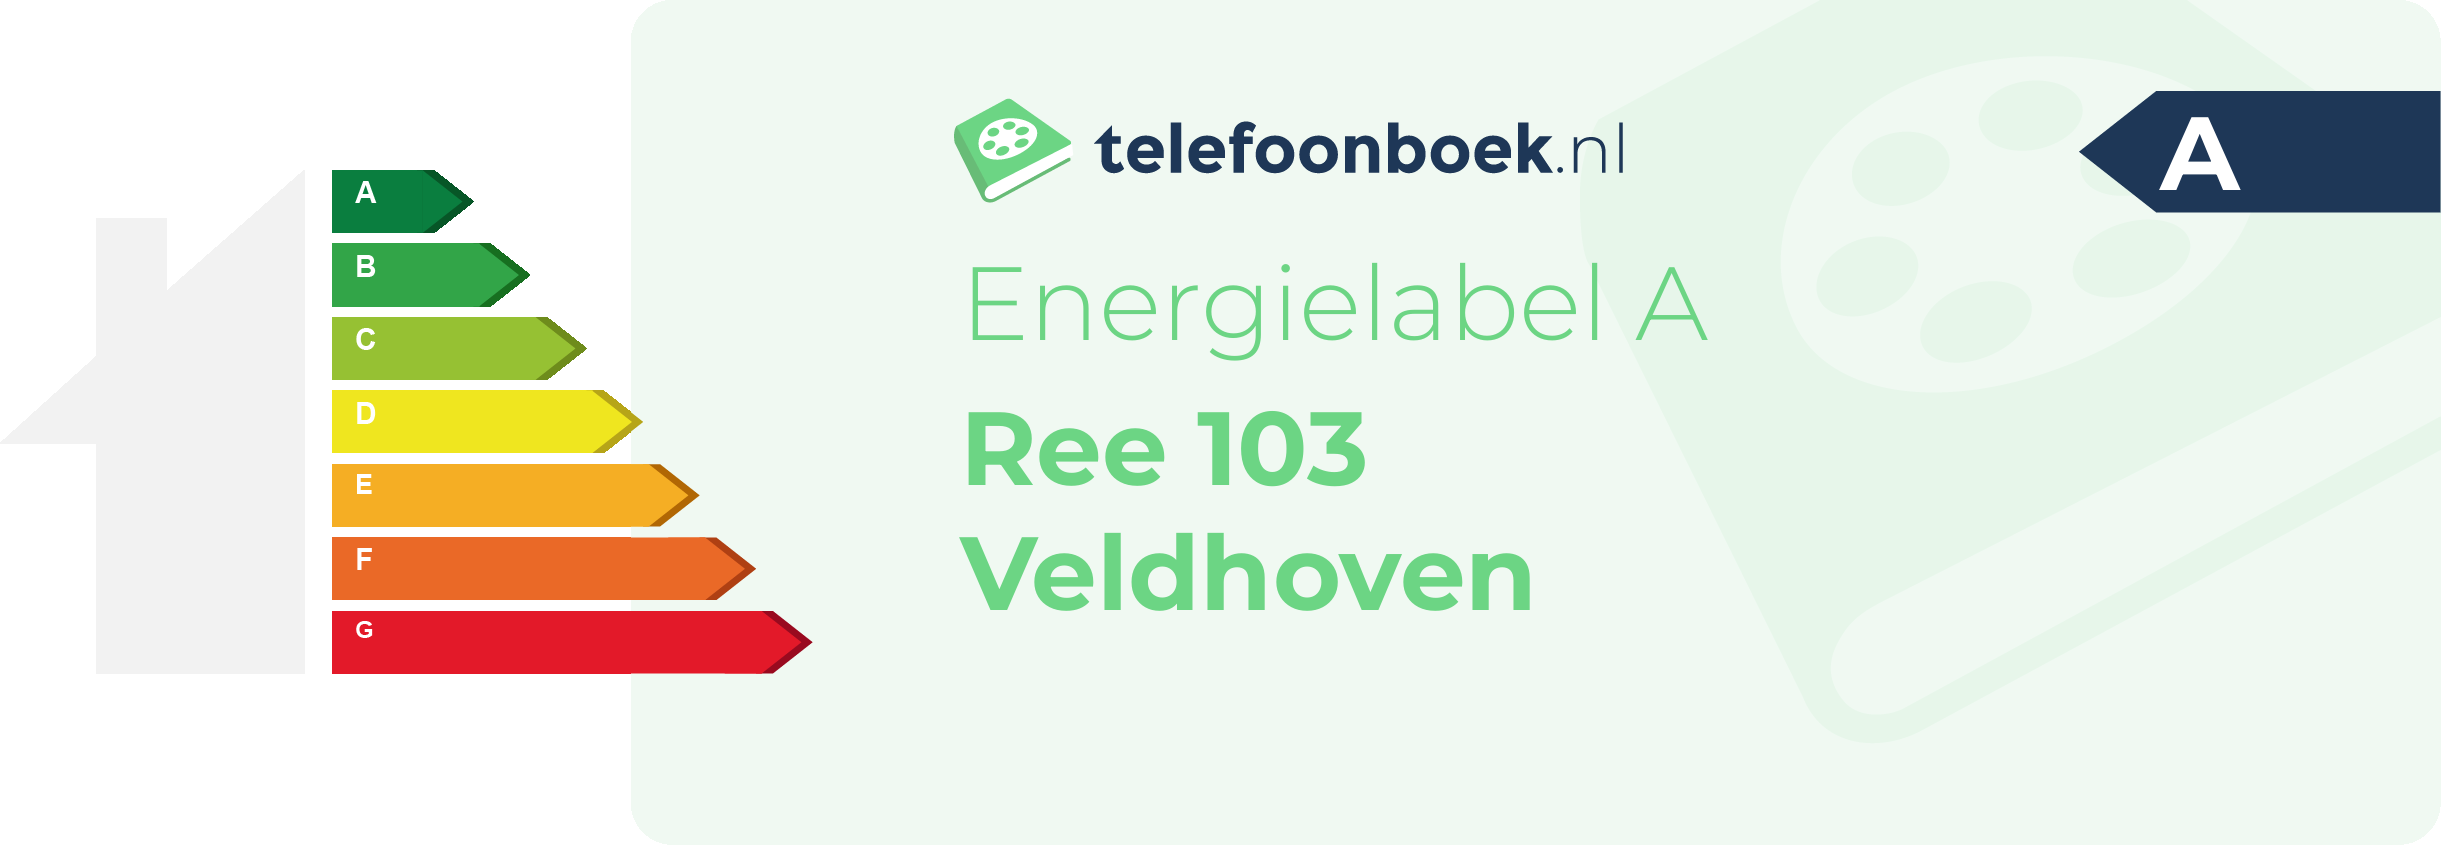 Energielabel Ree 103 Veldhoven